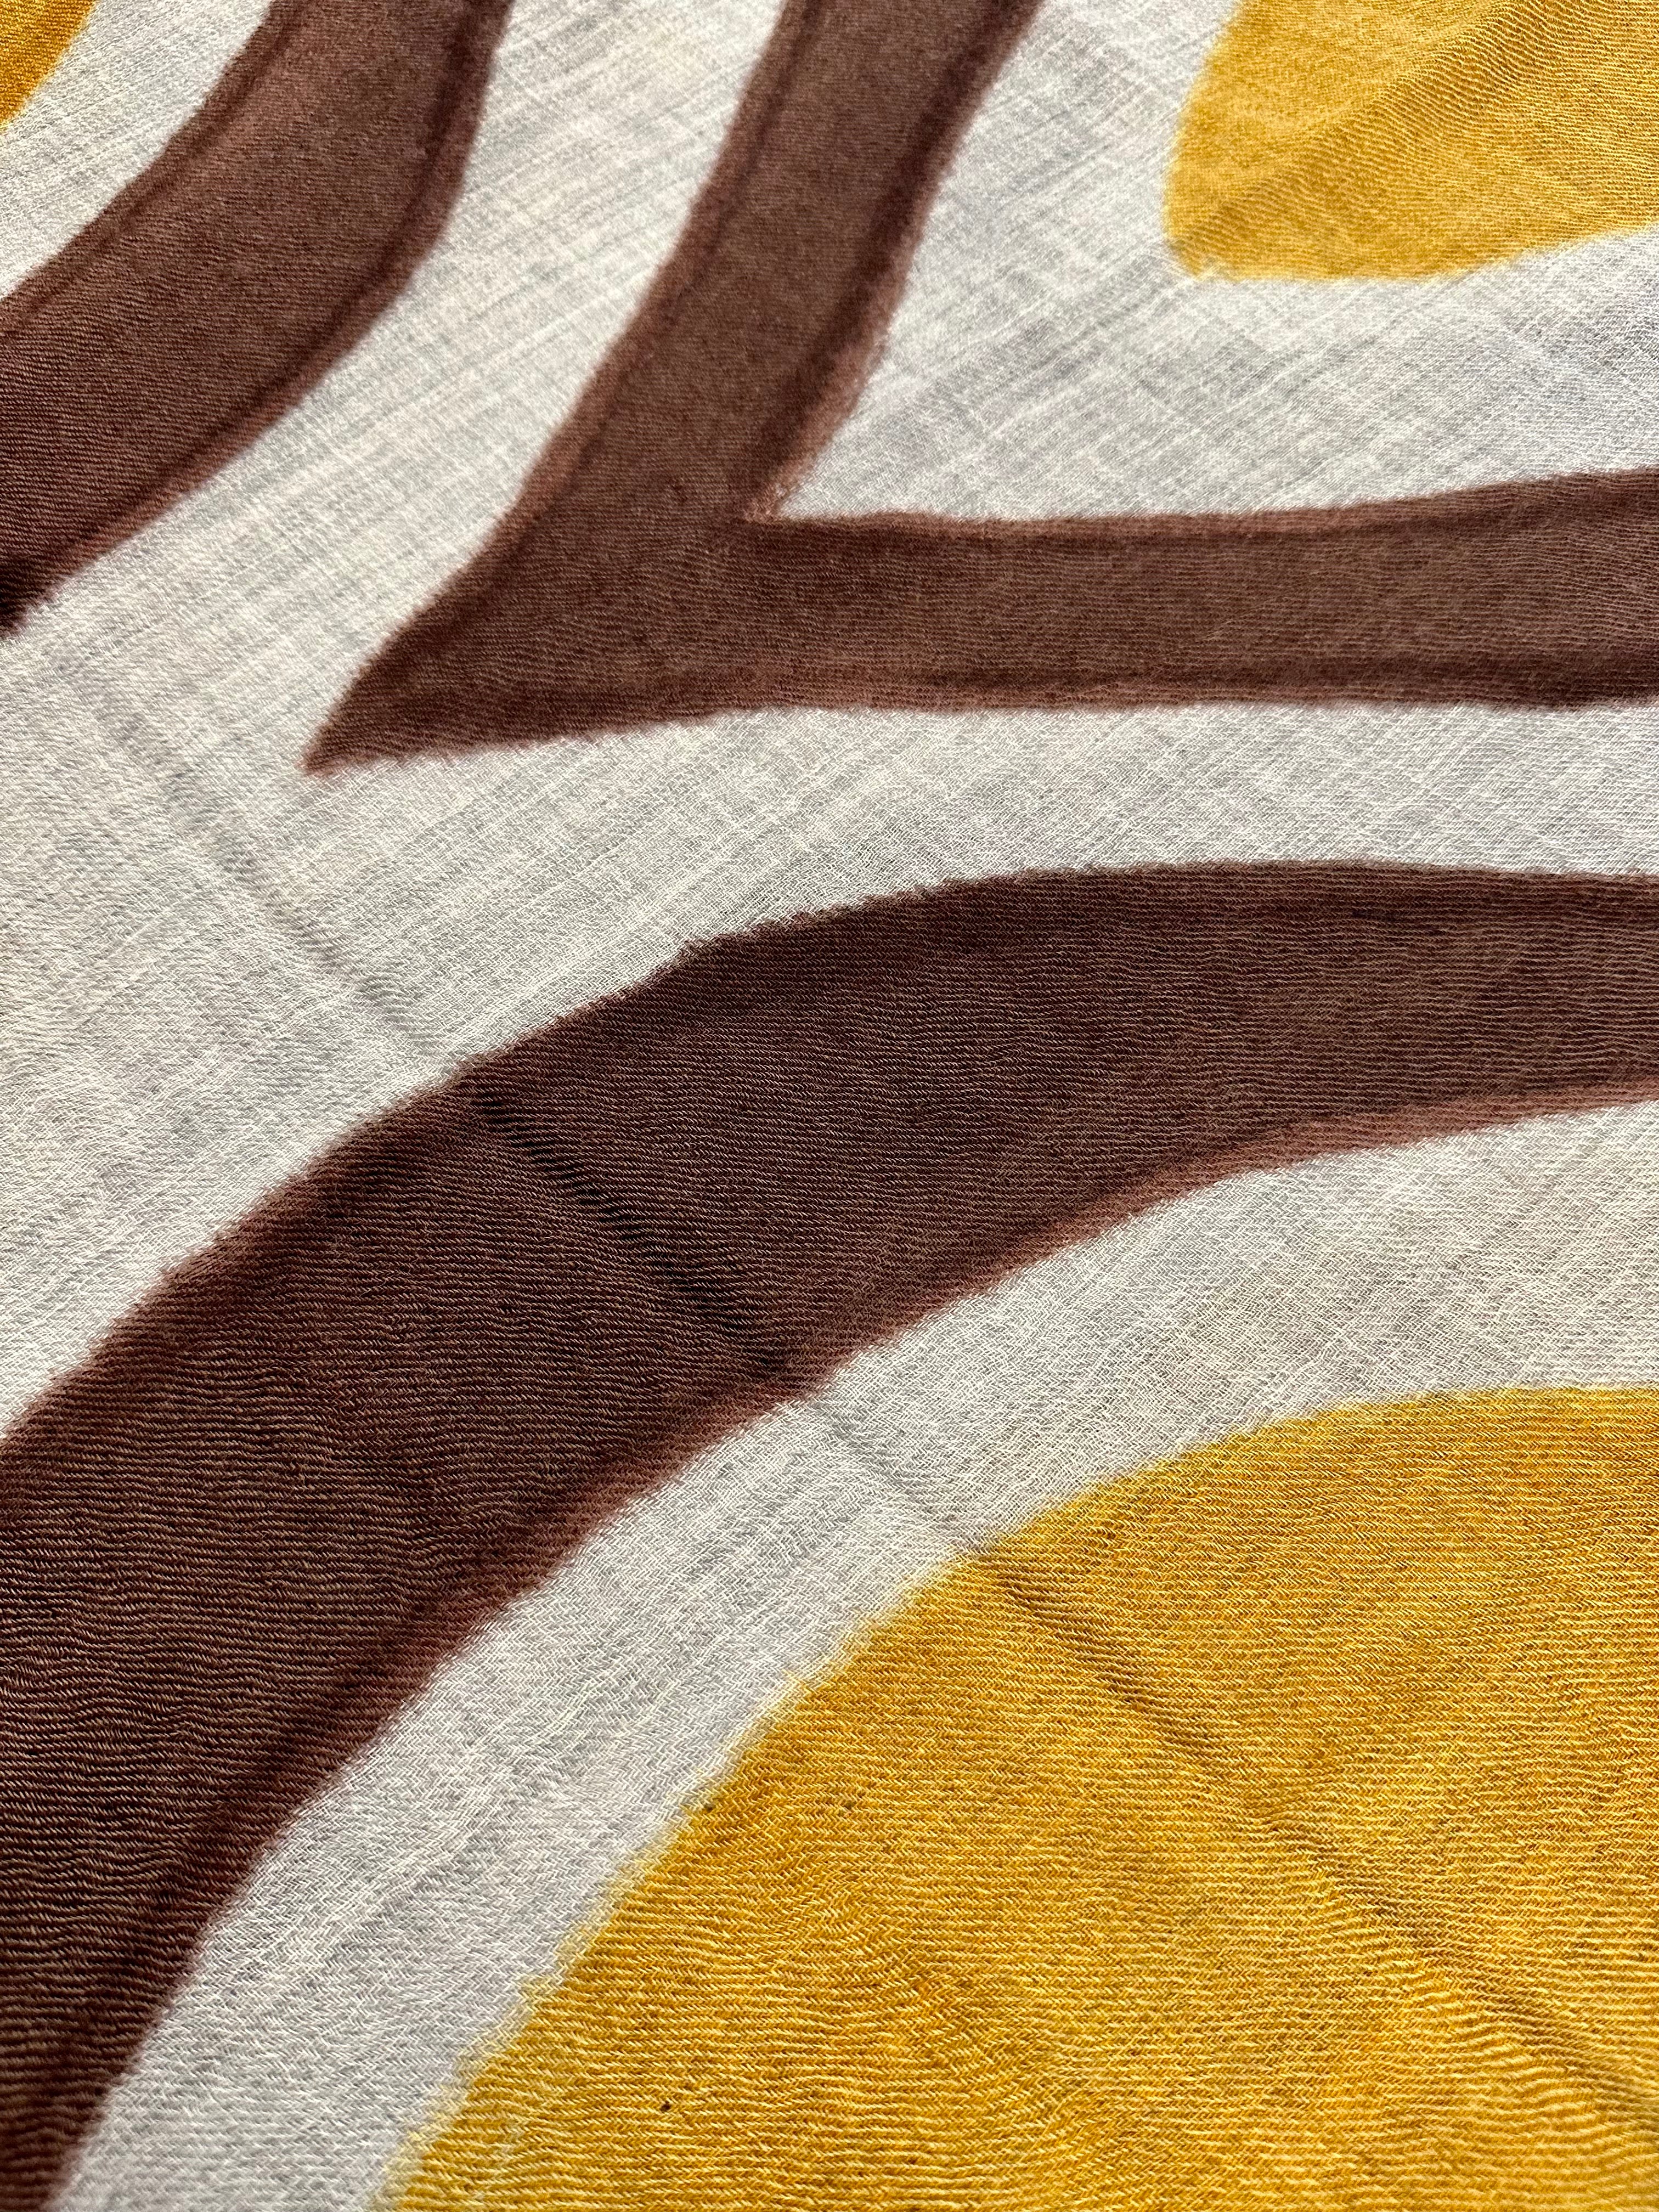 Sciarpa lana fantasia geometrica grigia gialla moro dipinta a mano Franco Bassi